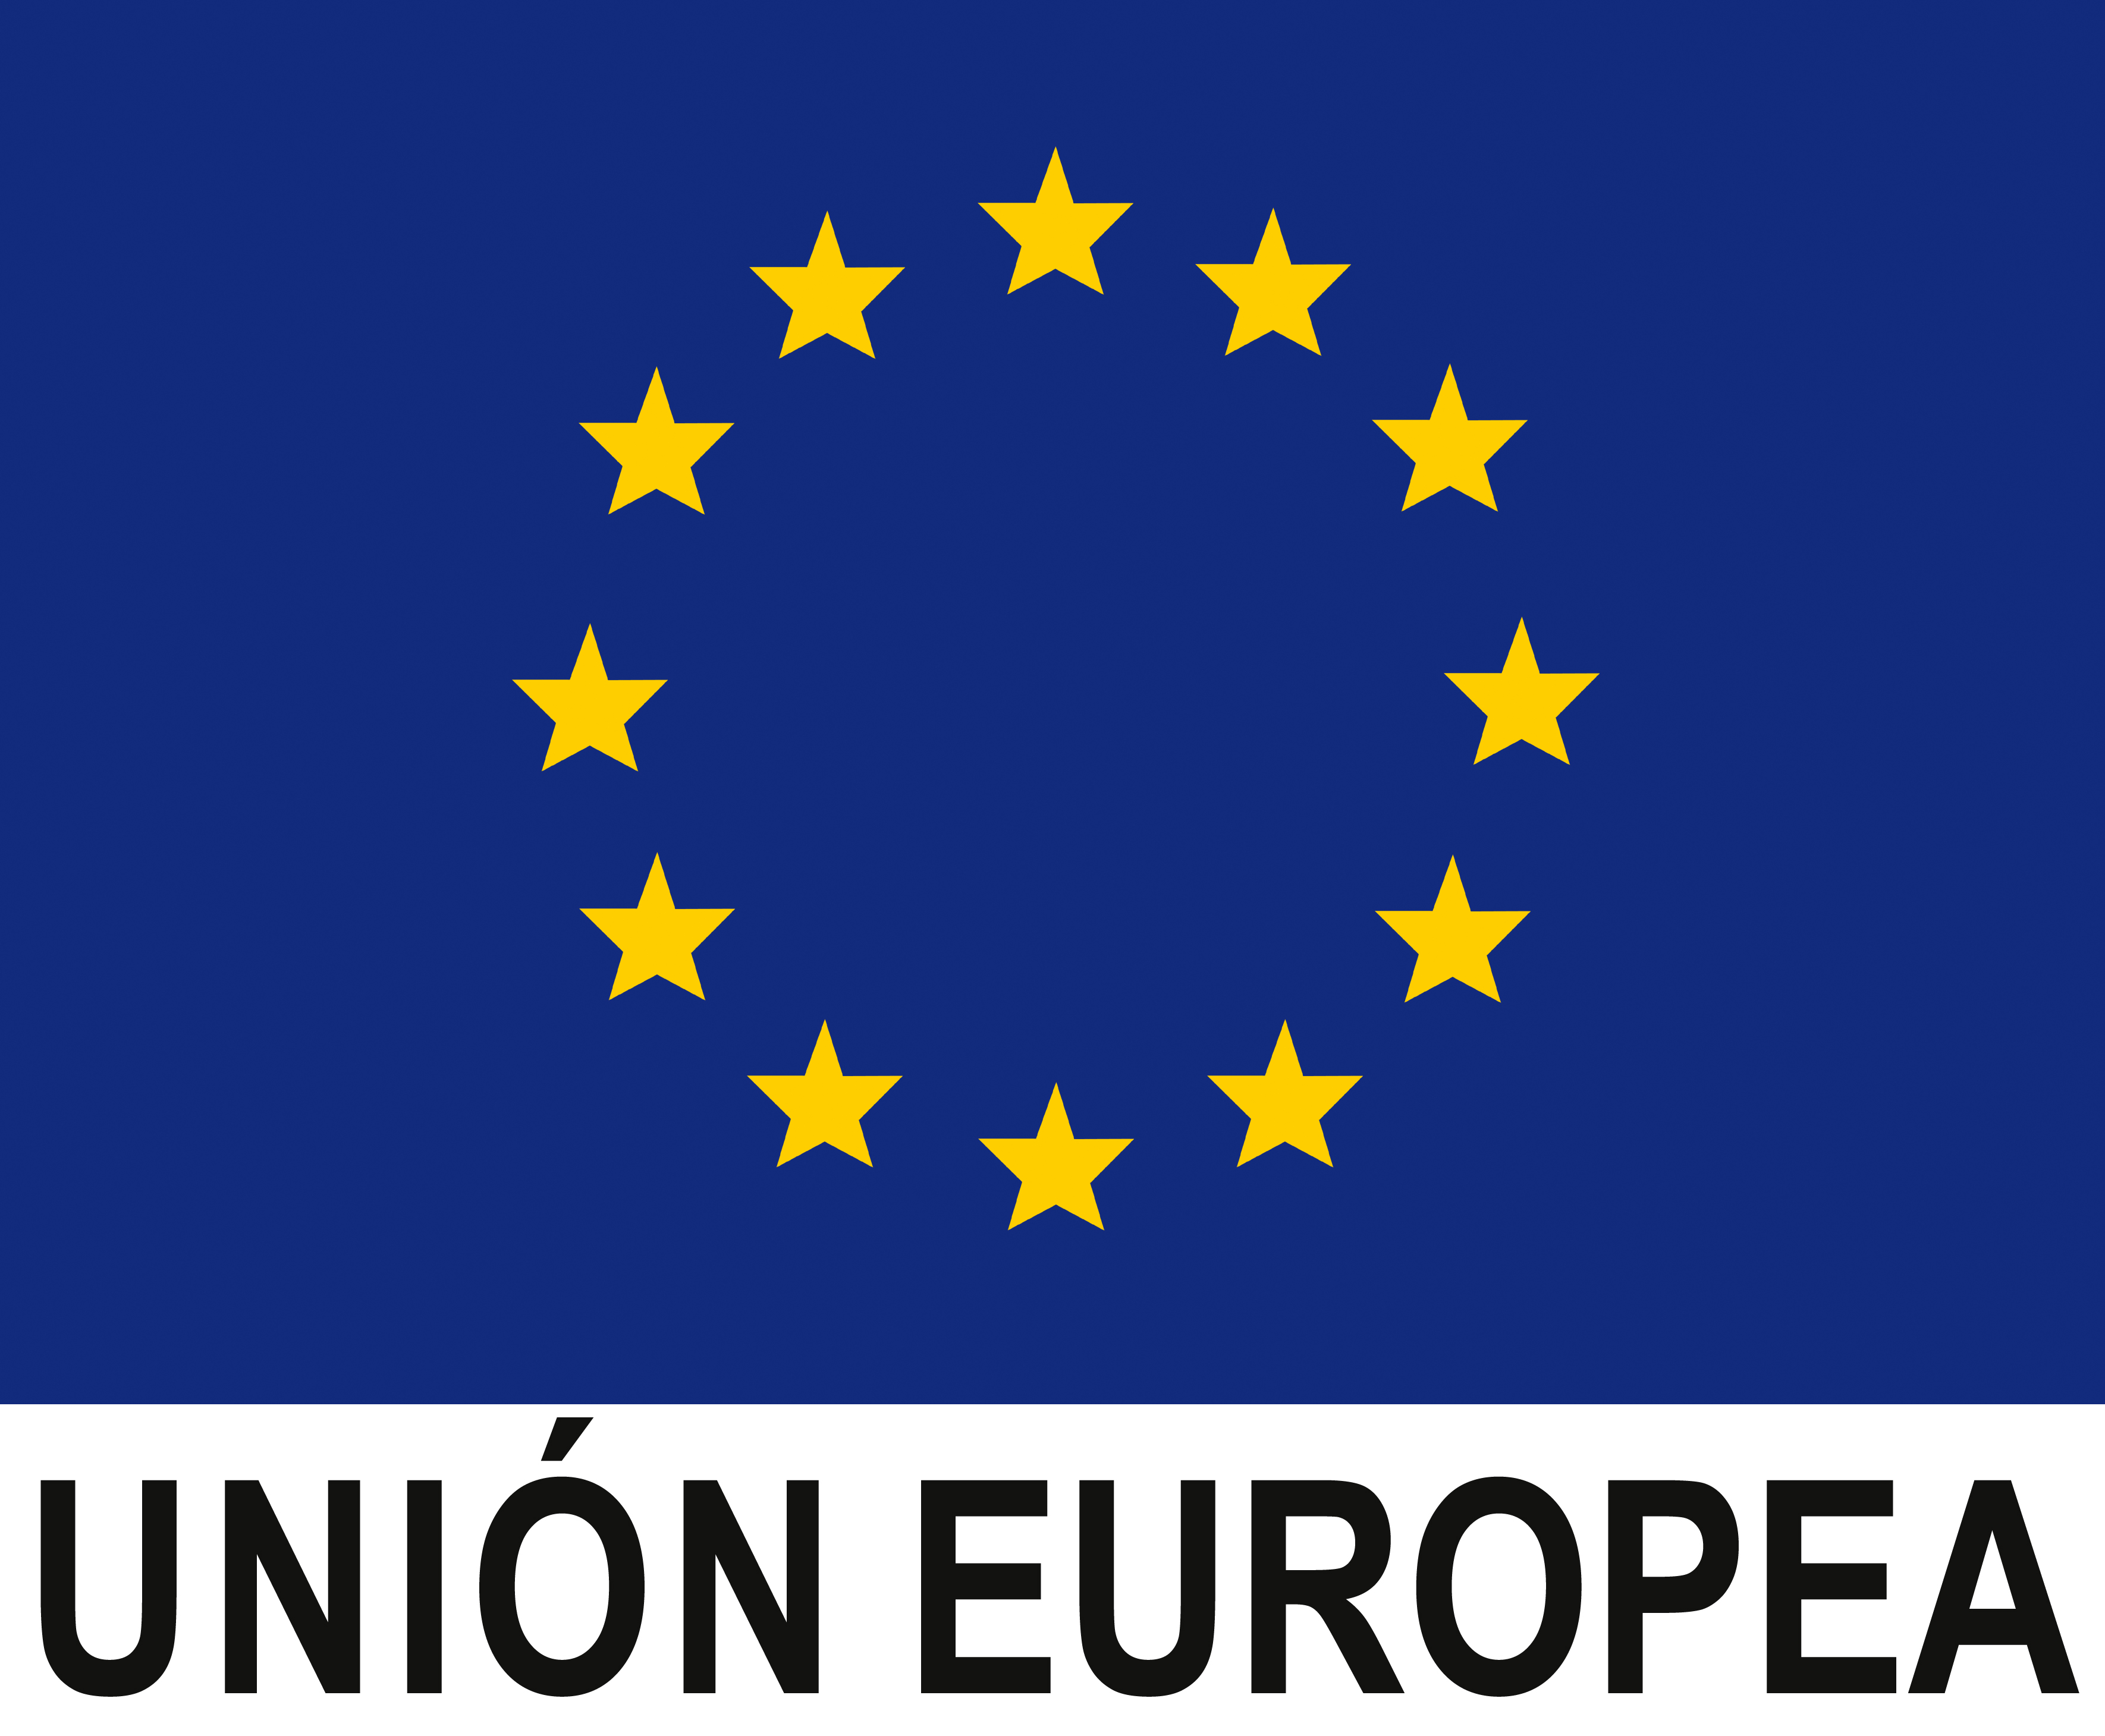 Euroopan unionin logo